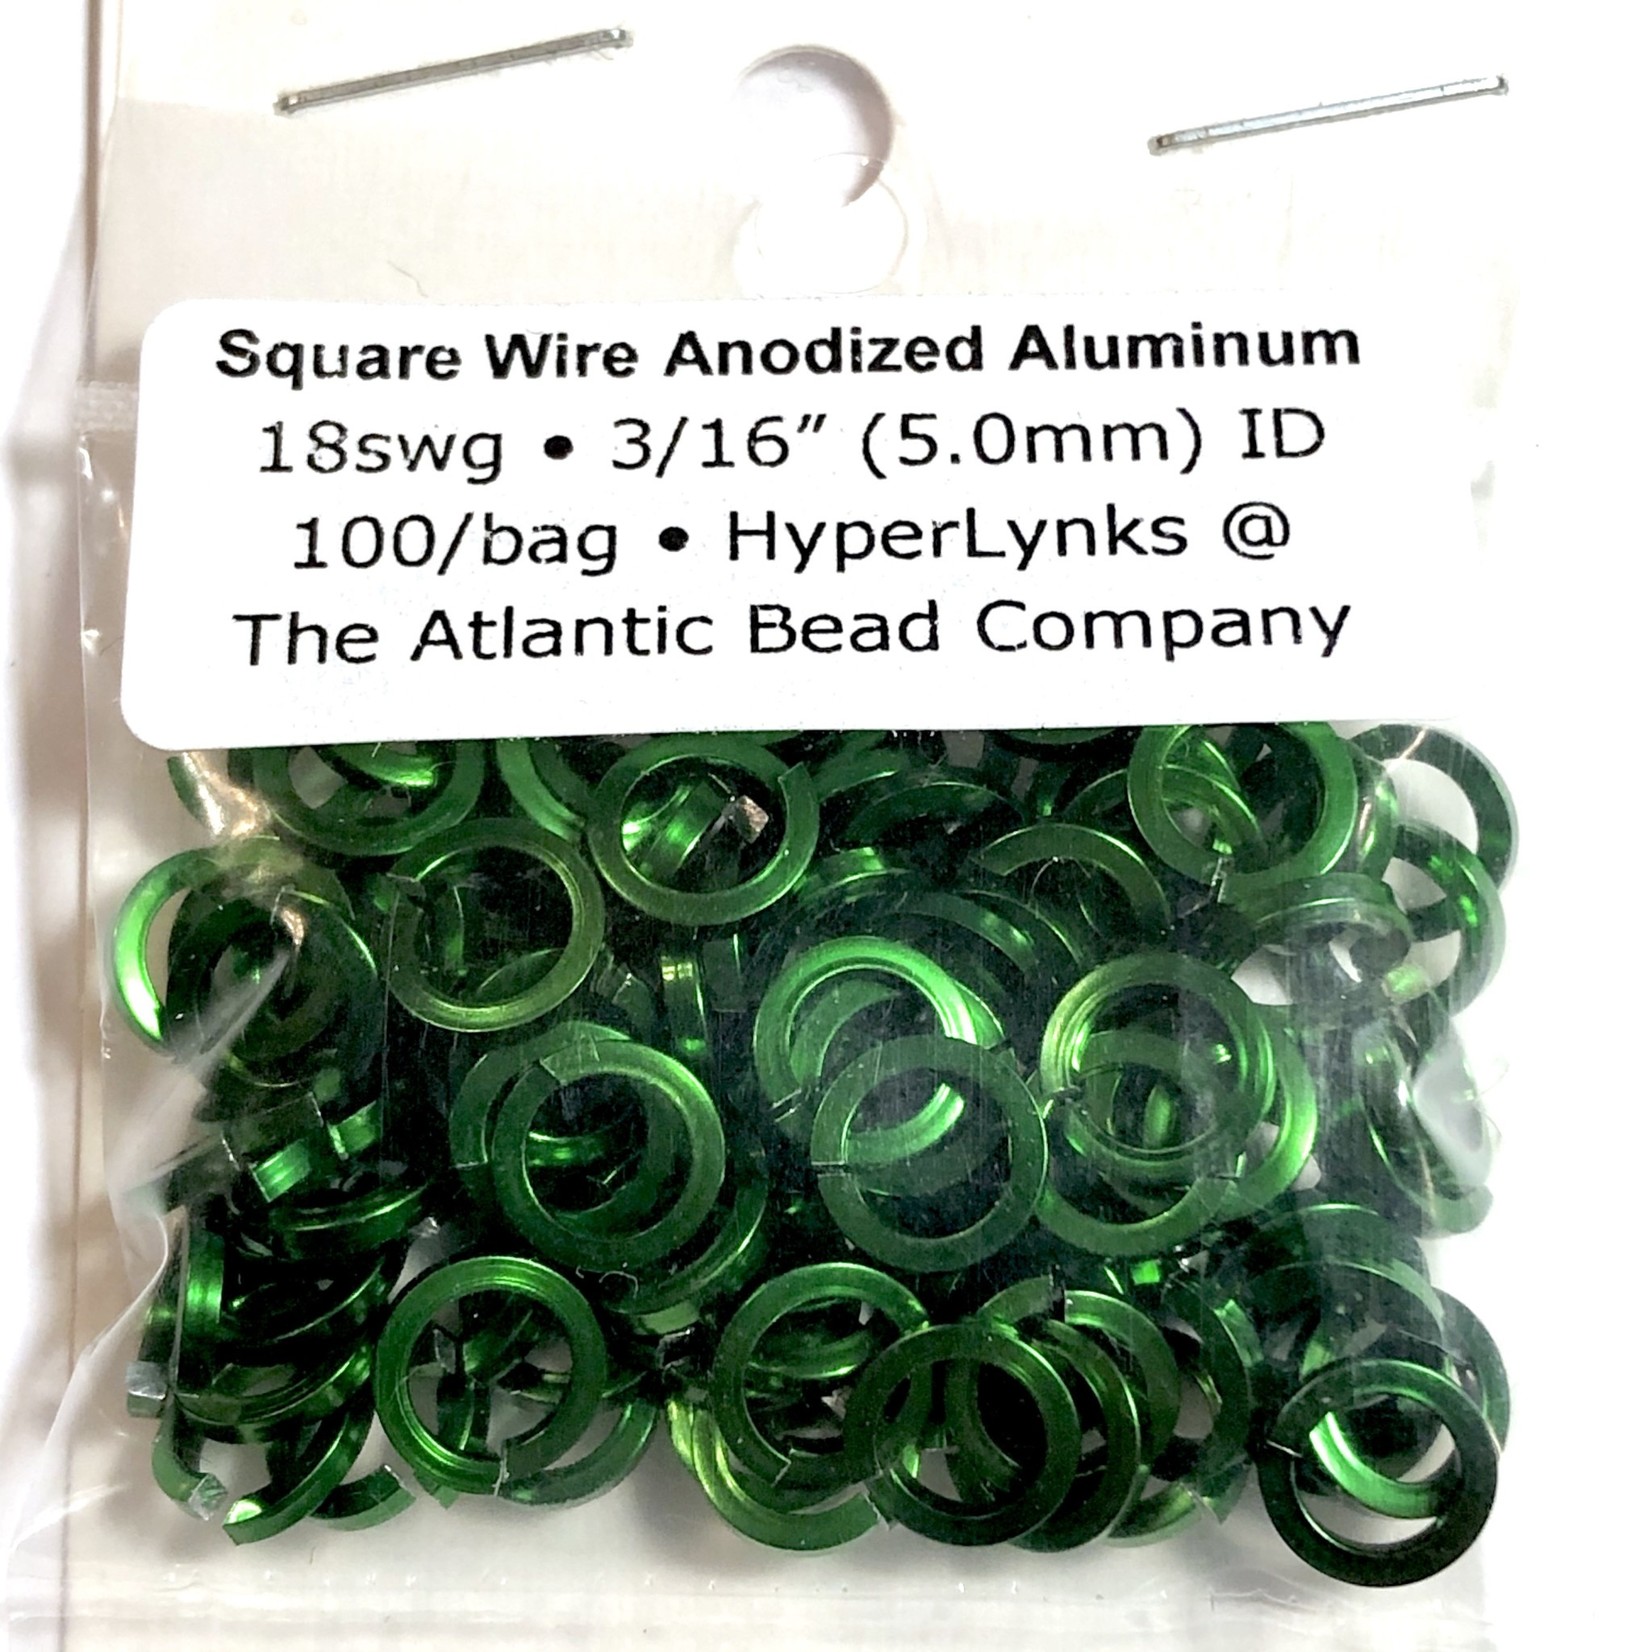 Hyperlinks Sq Wire Anodized Alum Rings Green 18ga 3/16" 100pcs